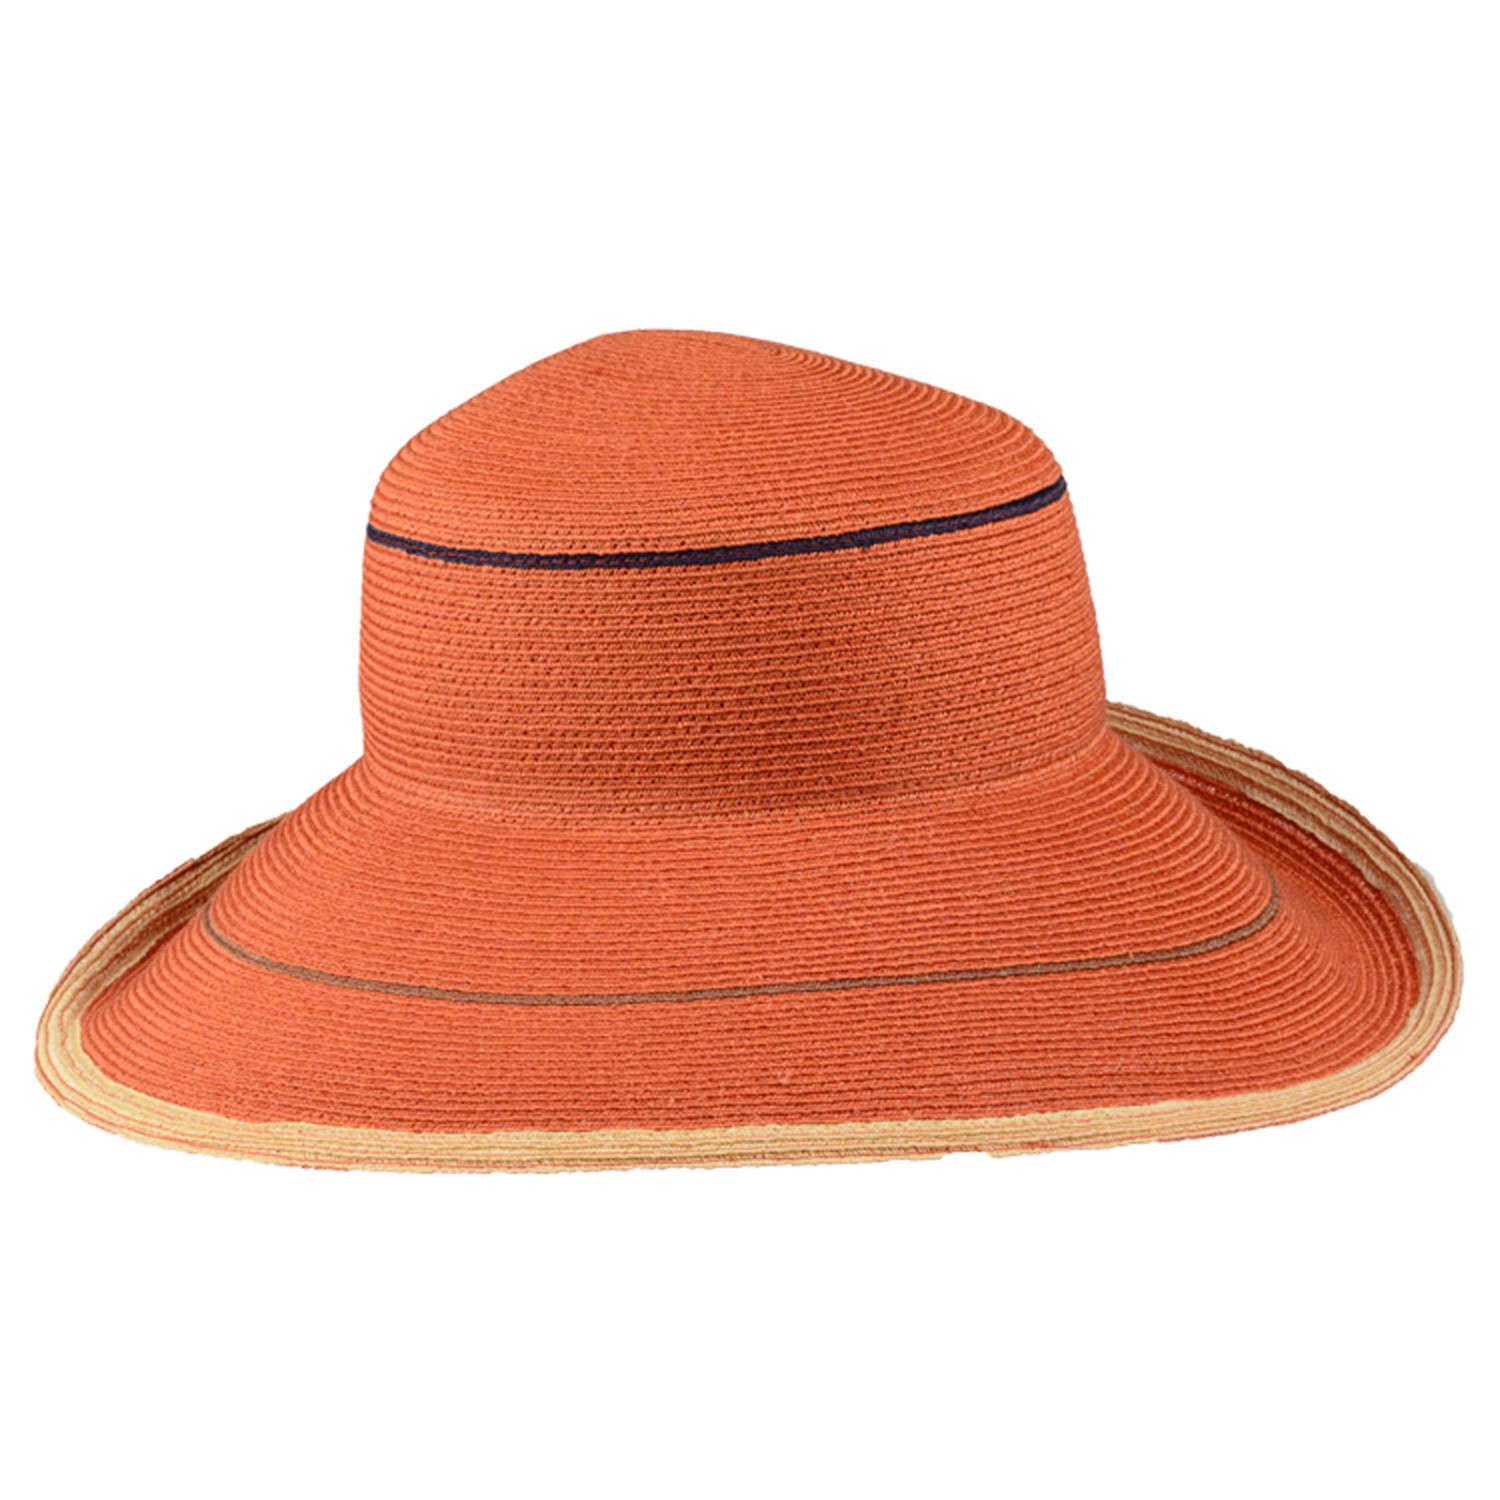 Alba MAYSER Womens' Summer Hat, Fast Shipping